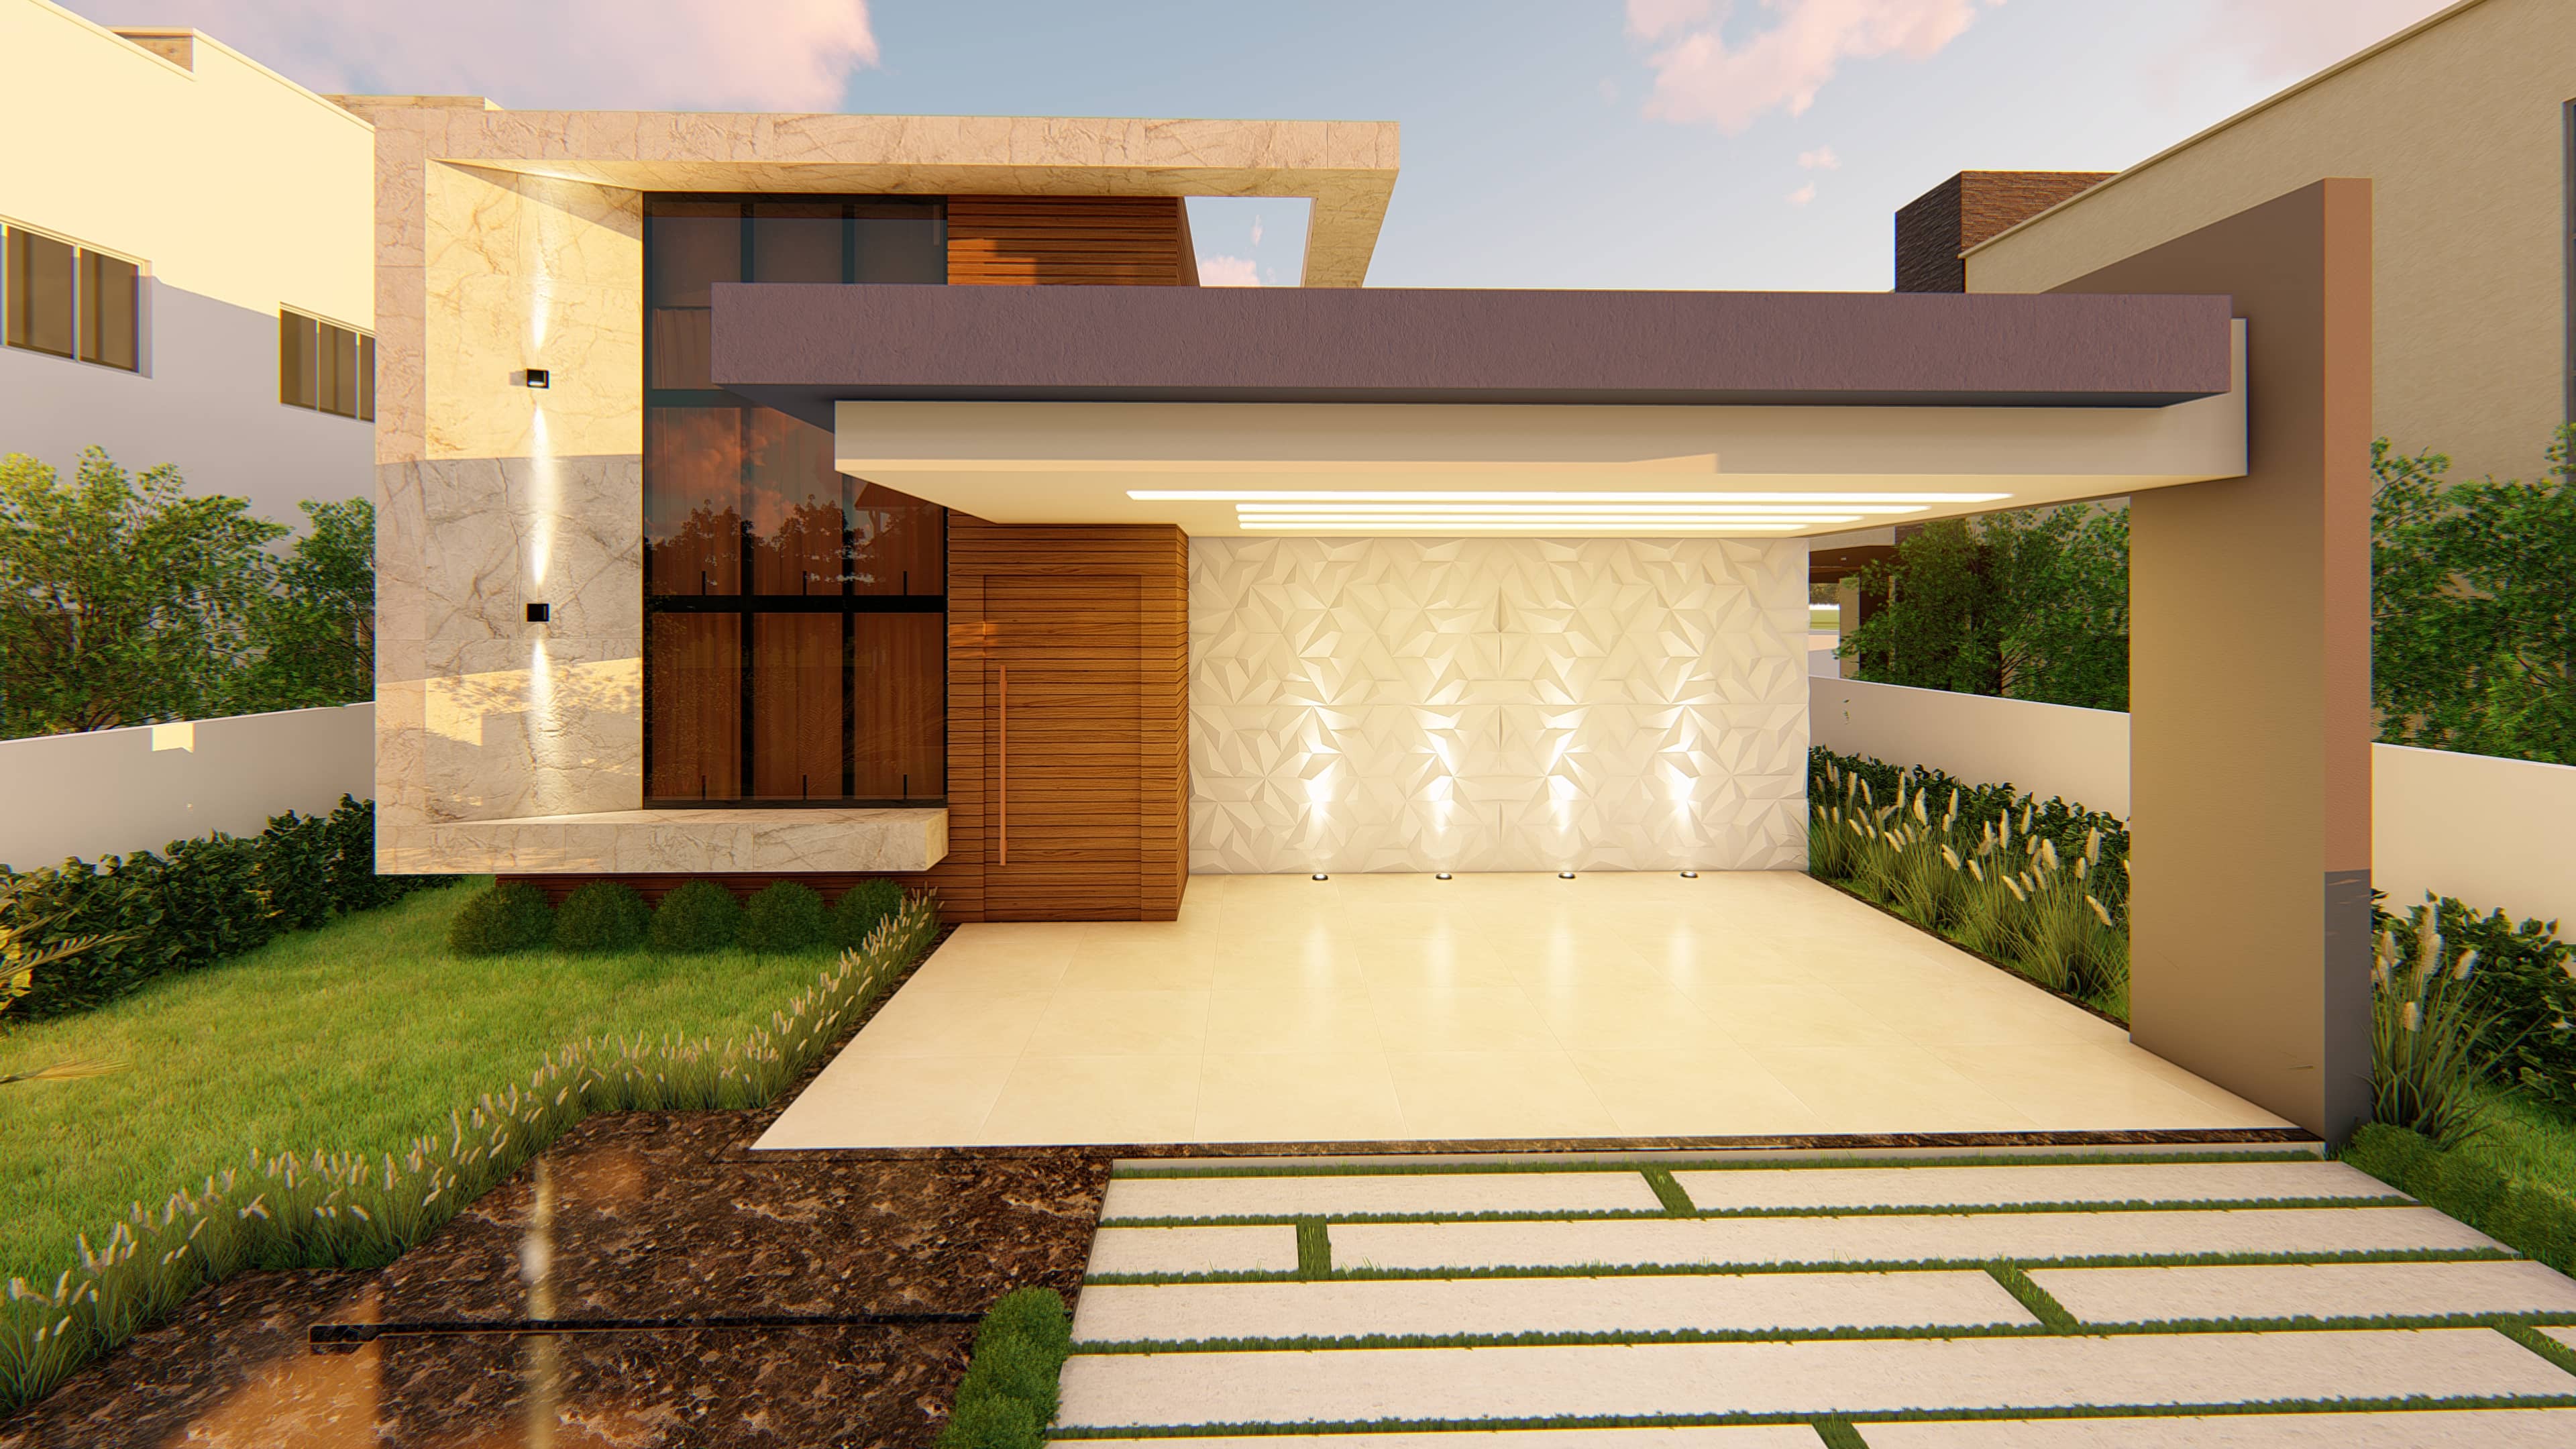 habitus-arquitetura-mossoro-projeto-casa-residencia-moderna-fachada